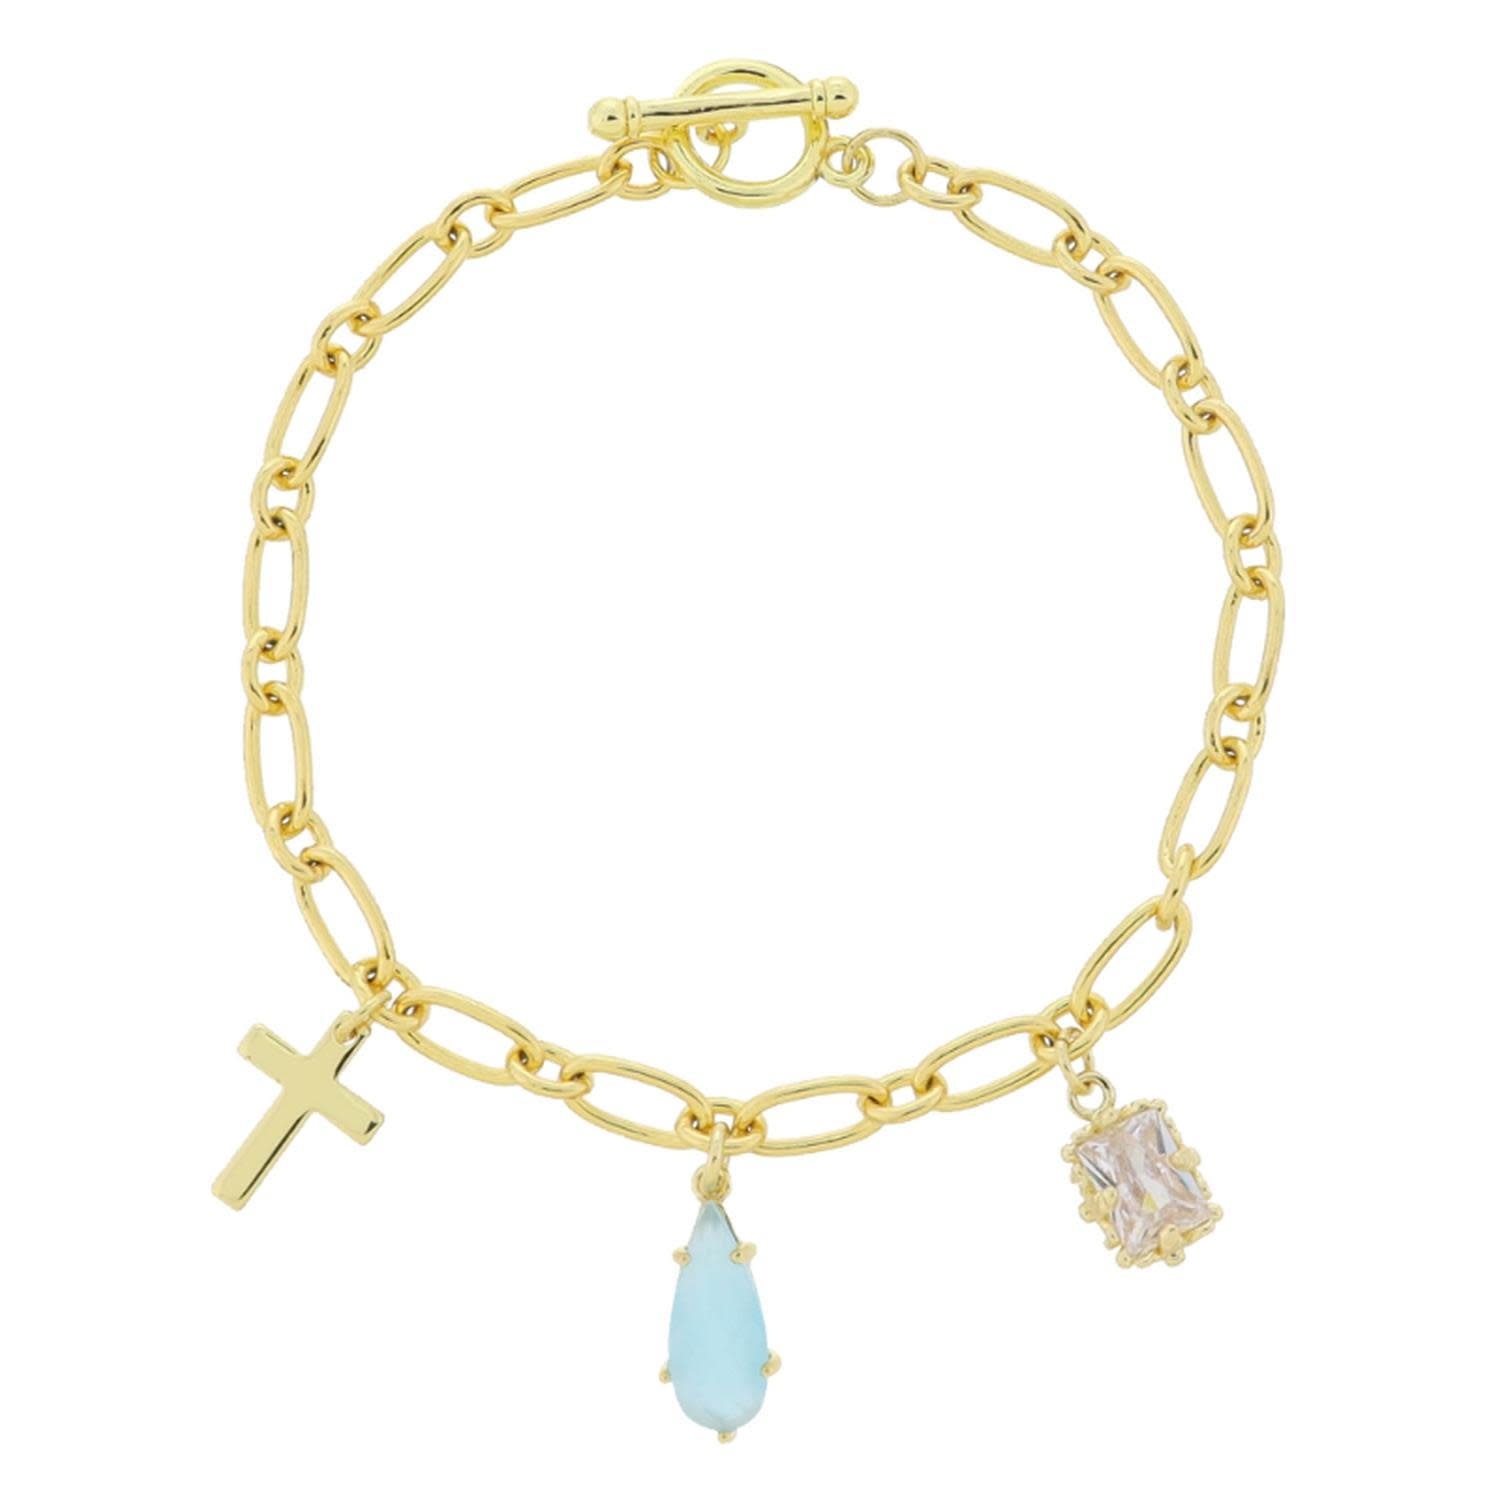 18K Gold Plated Cross, Aqua Teardrop, Emerald Crystal Charms Bracelet